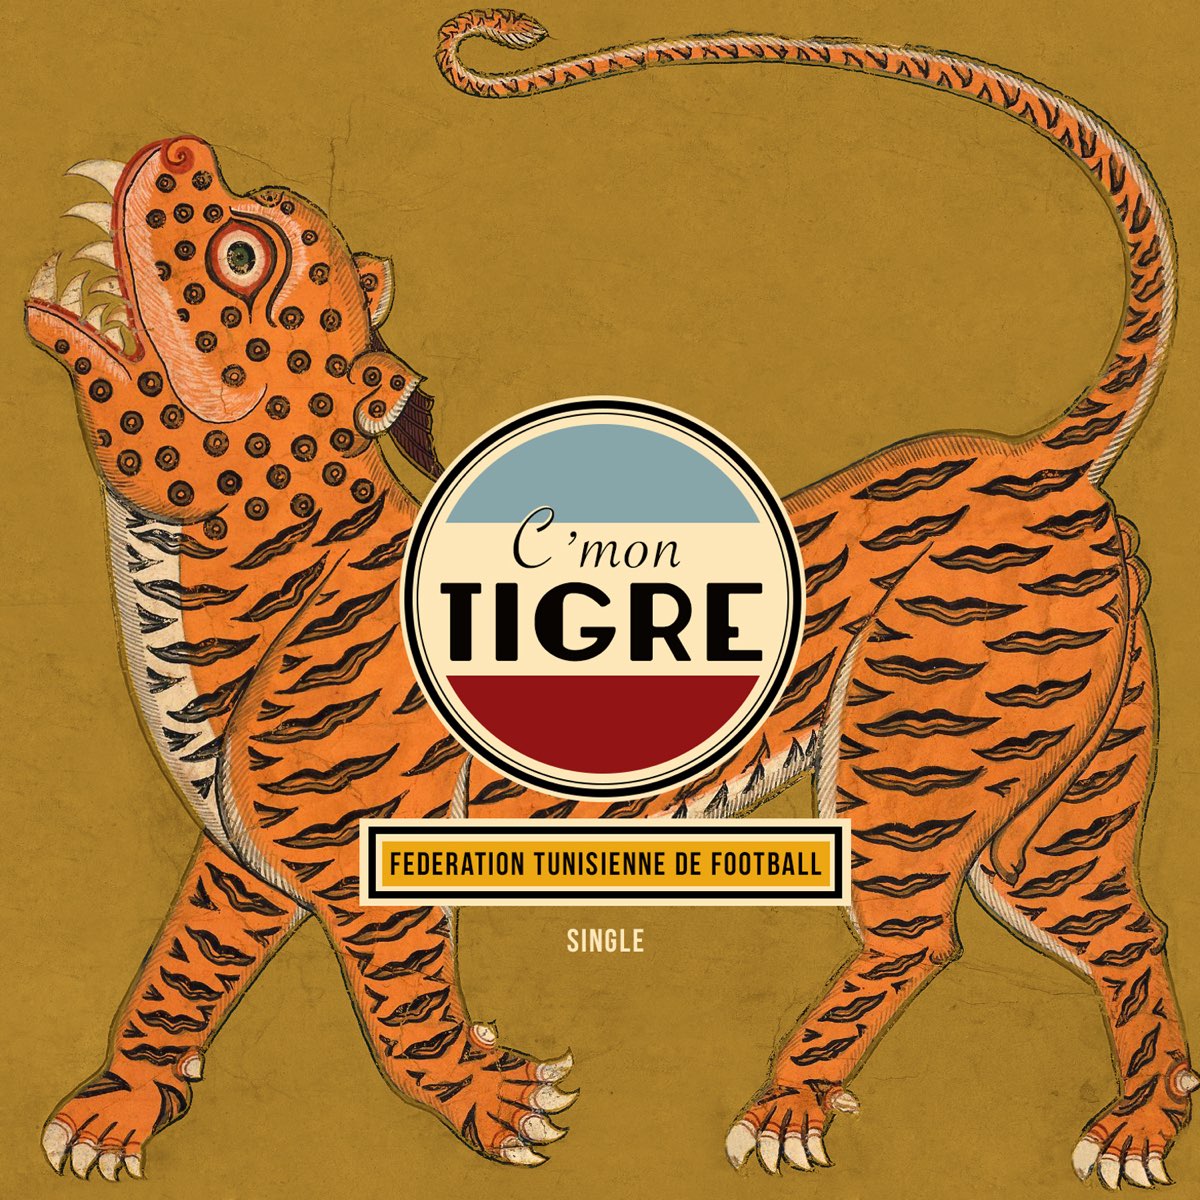 Federation Tunisienne de Football - Single by C'mon Tigre on Apple Music